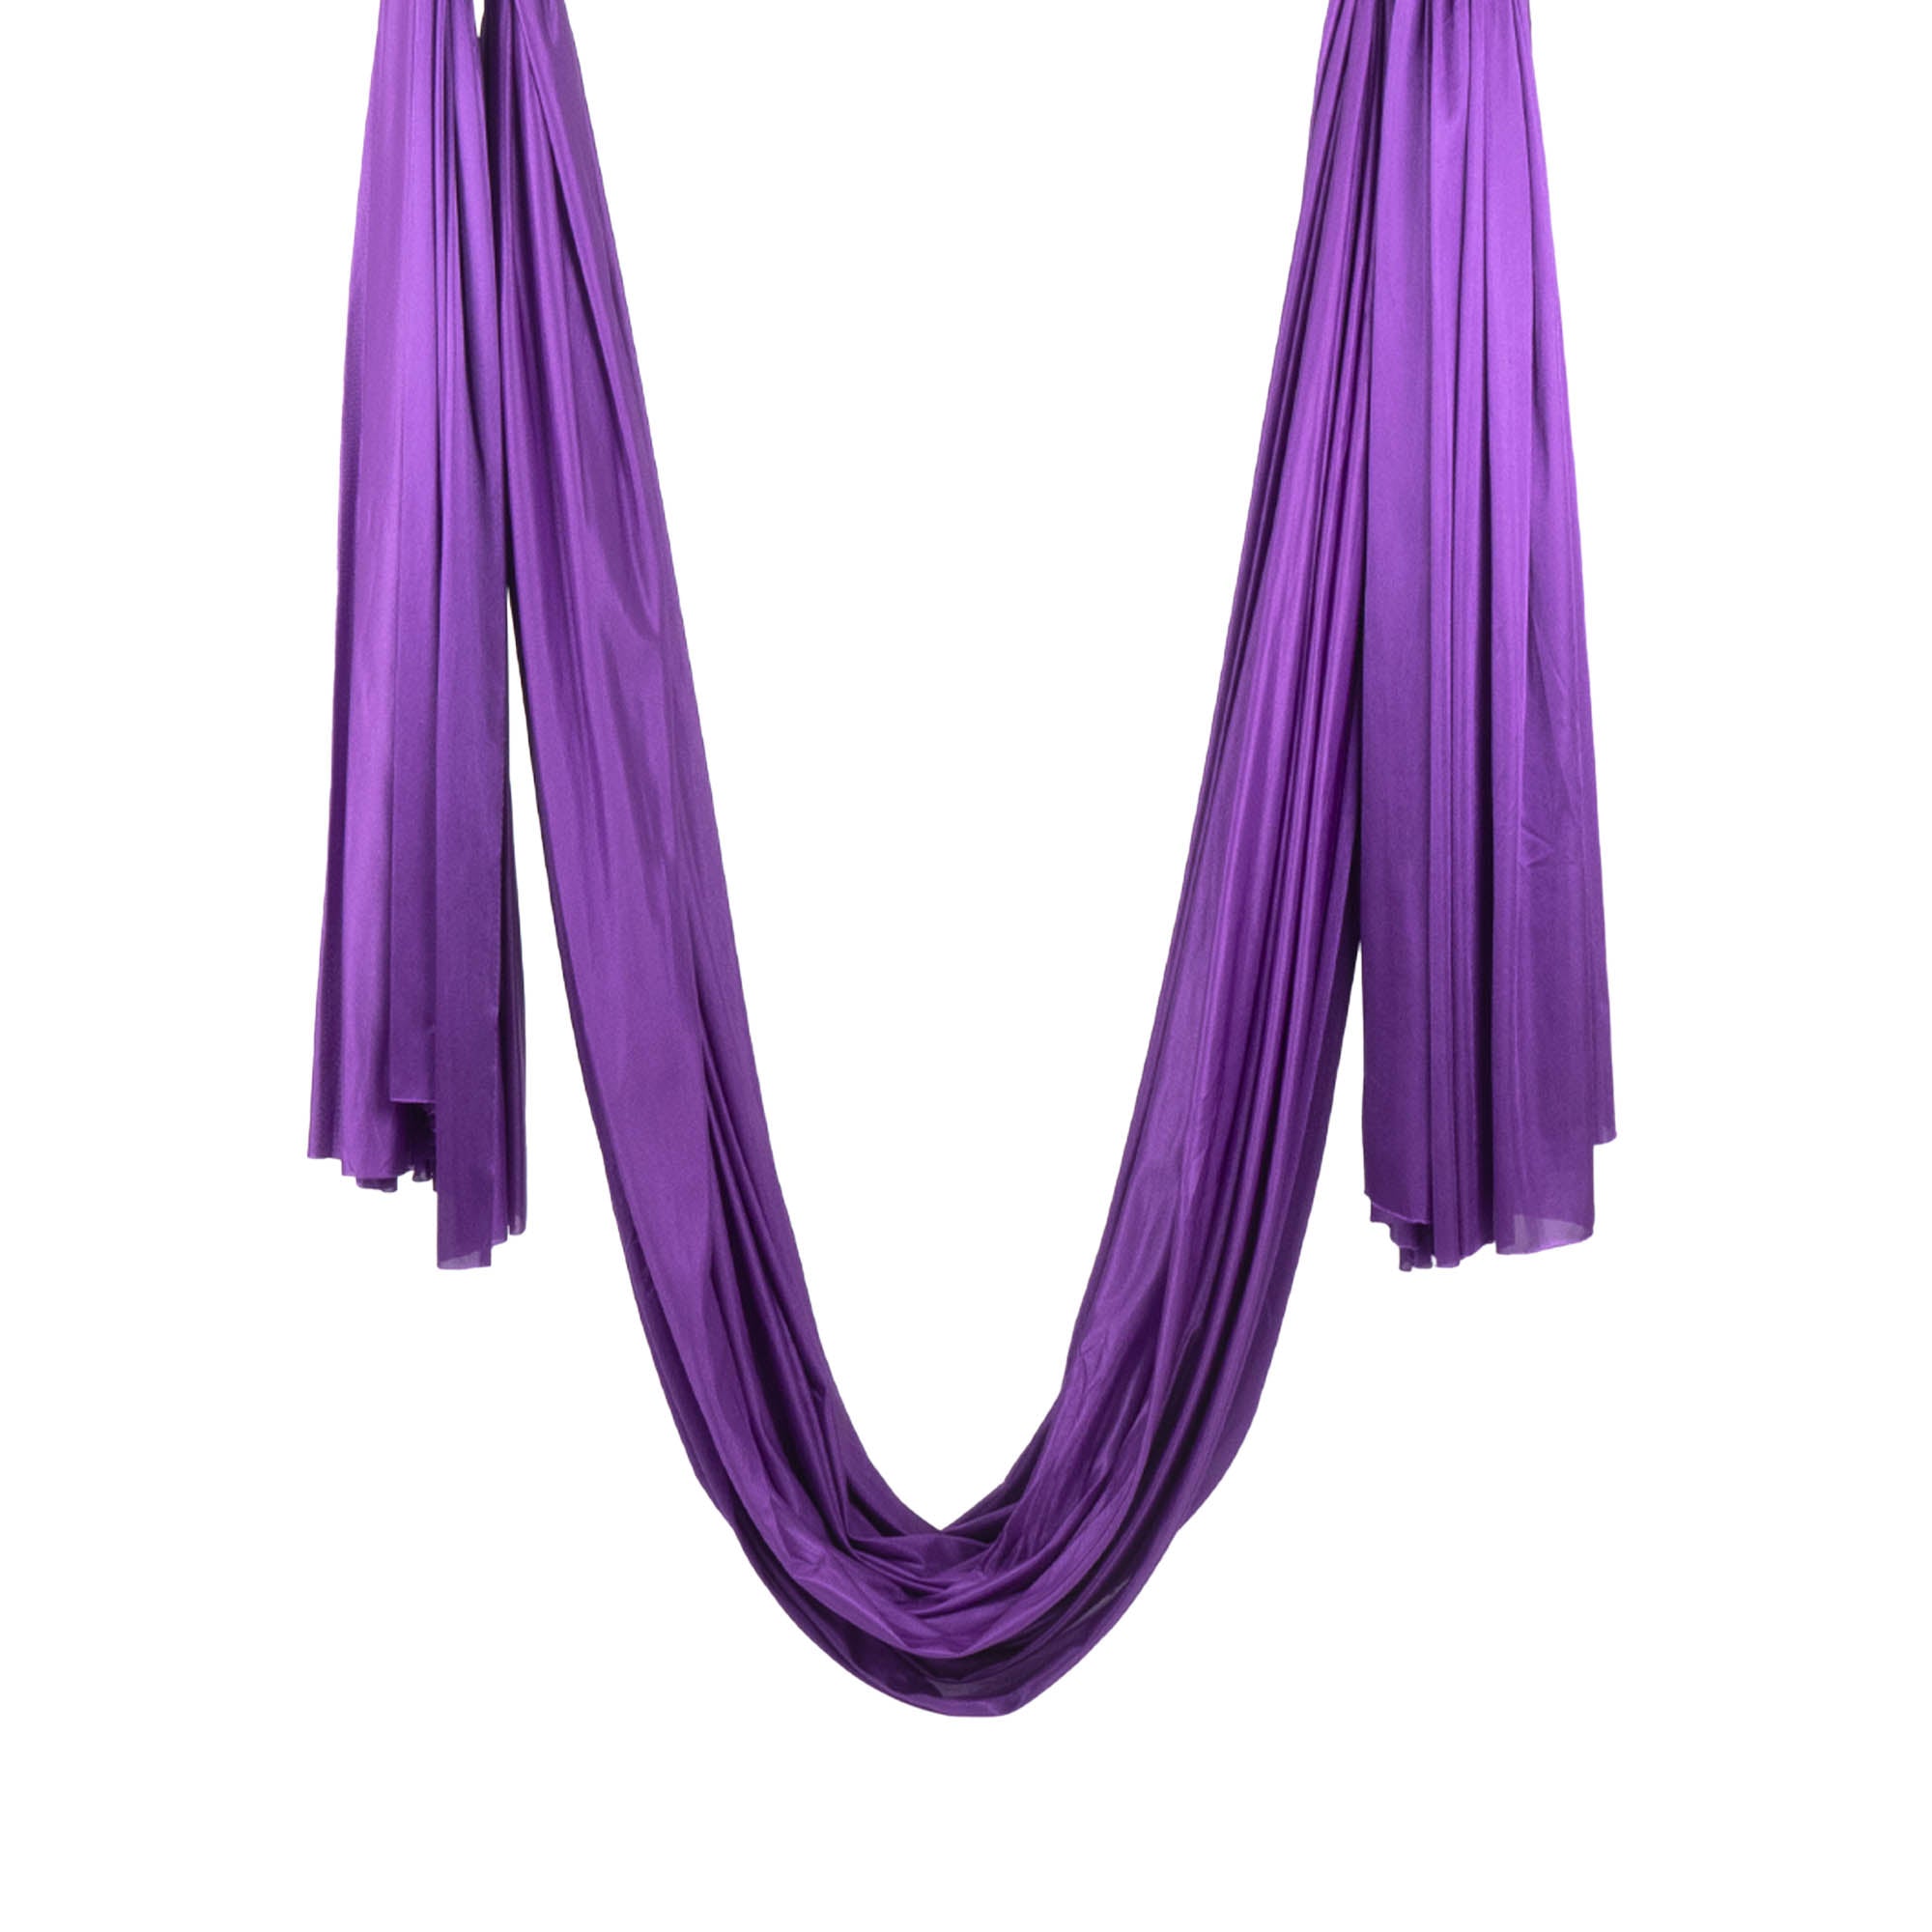 Purple yoga hammock rigged